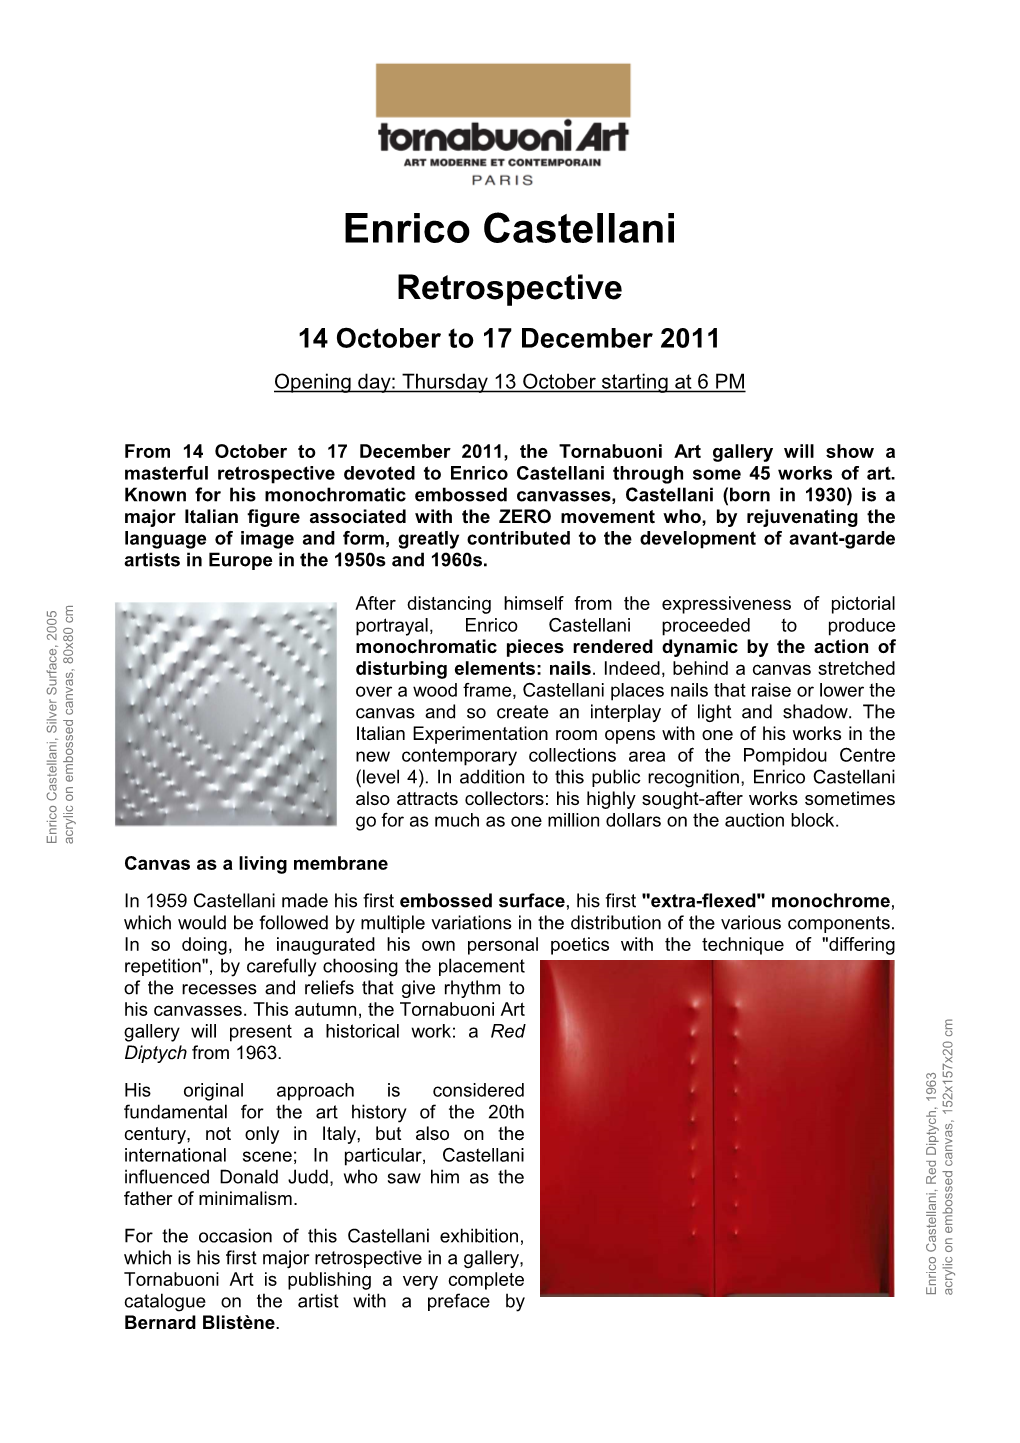 PR Tornabuoni Art Presents Enrico Castellani from October 14 To